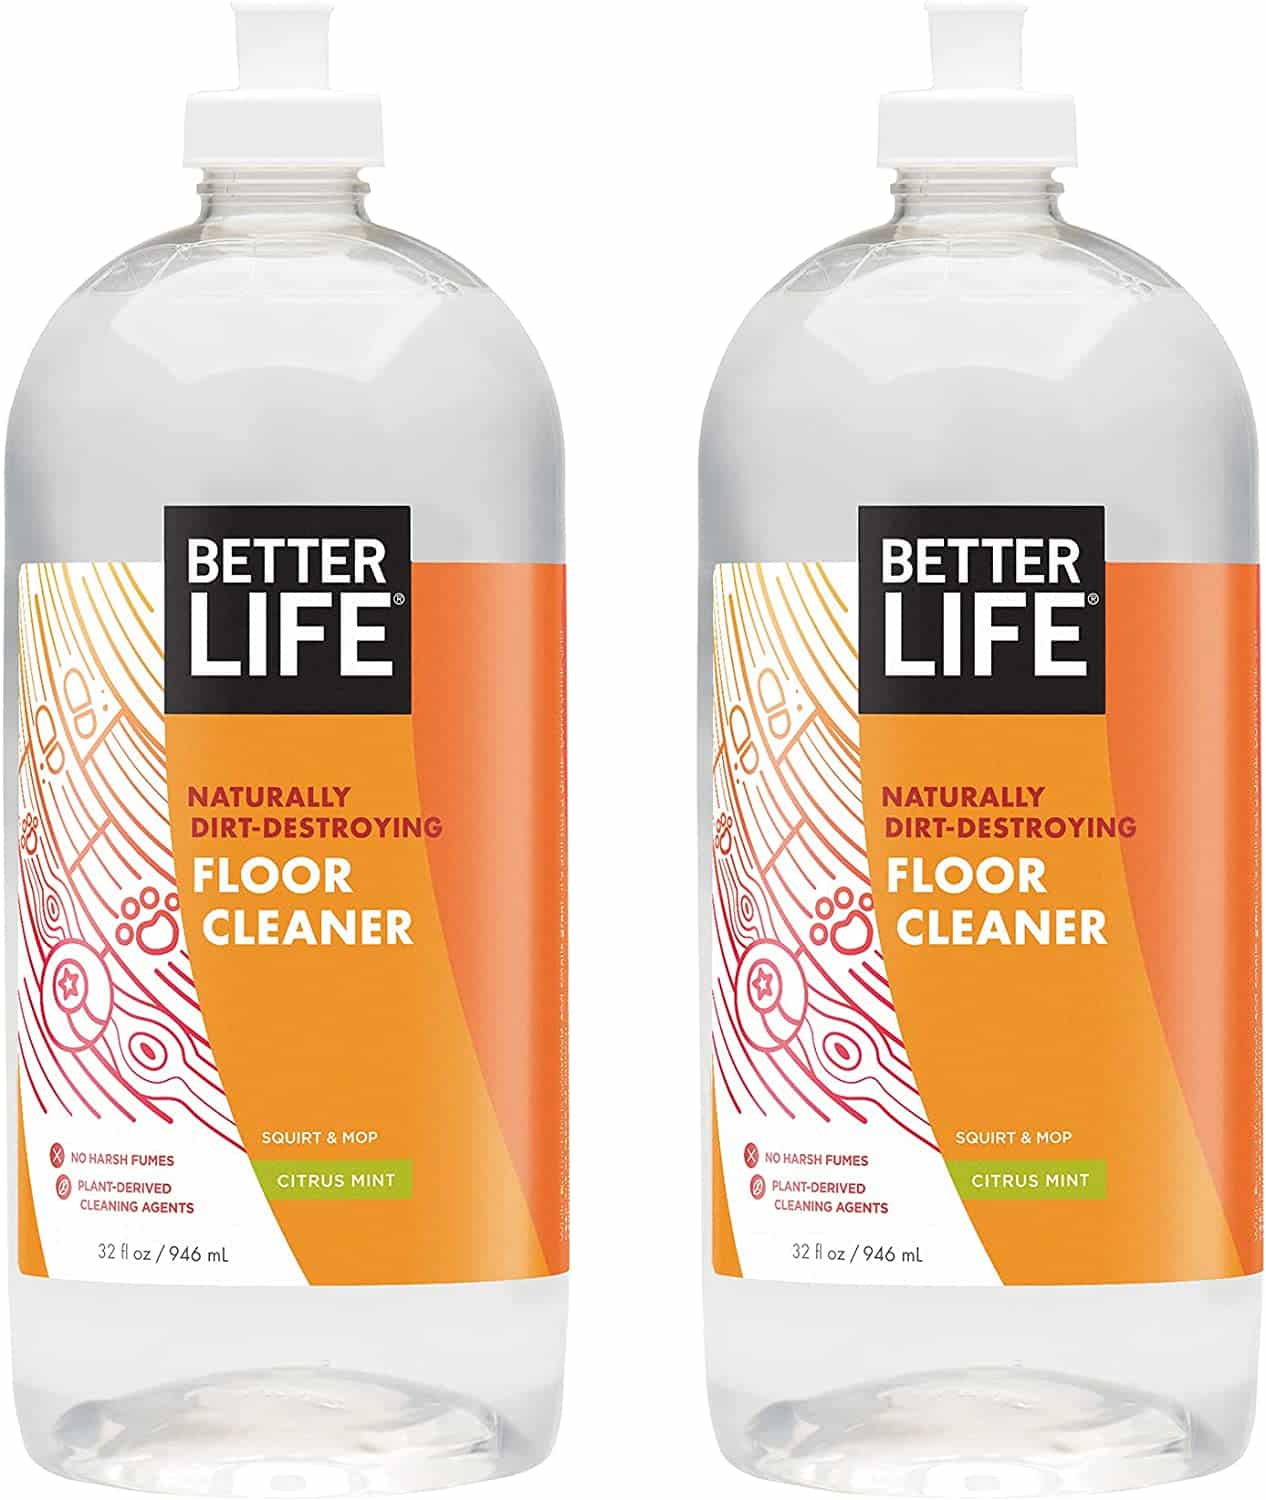 Better Life Naturally Dirt-Destroying Floor Cleaner Logo